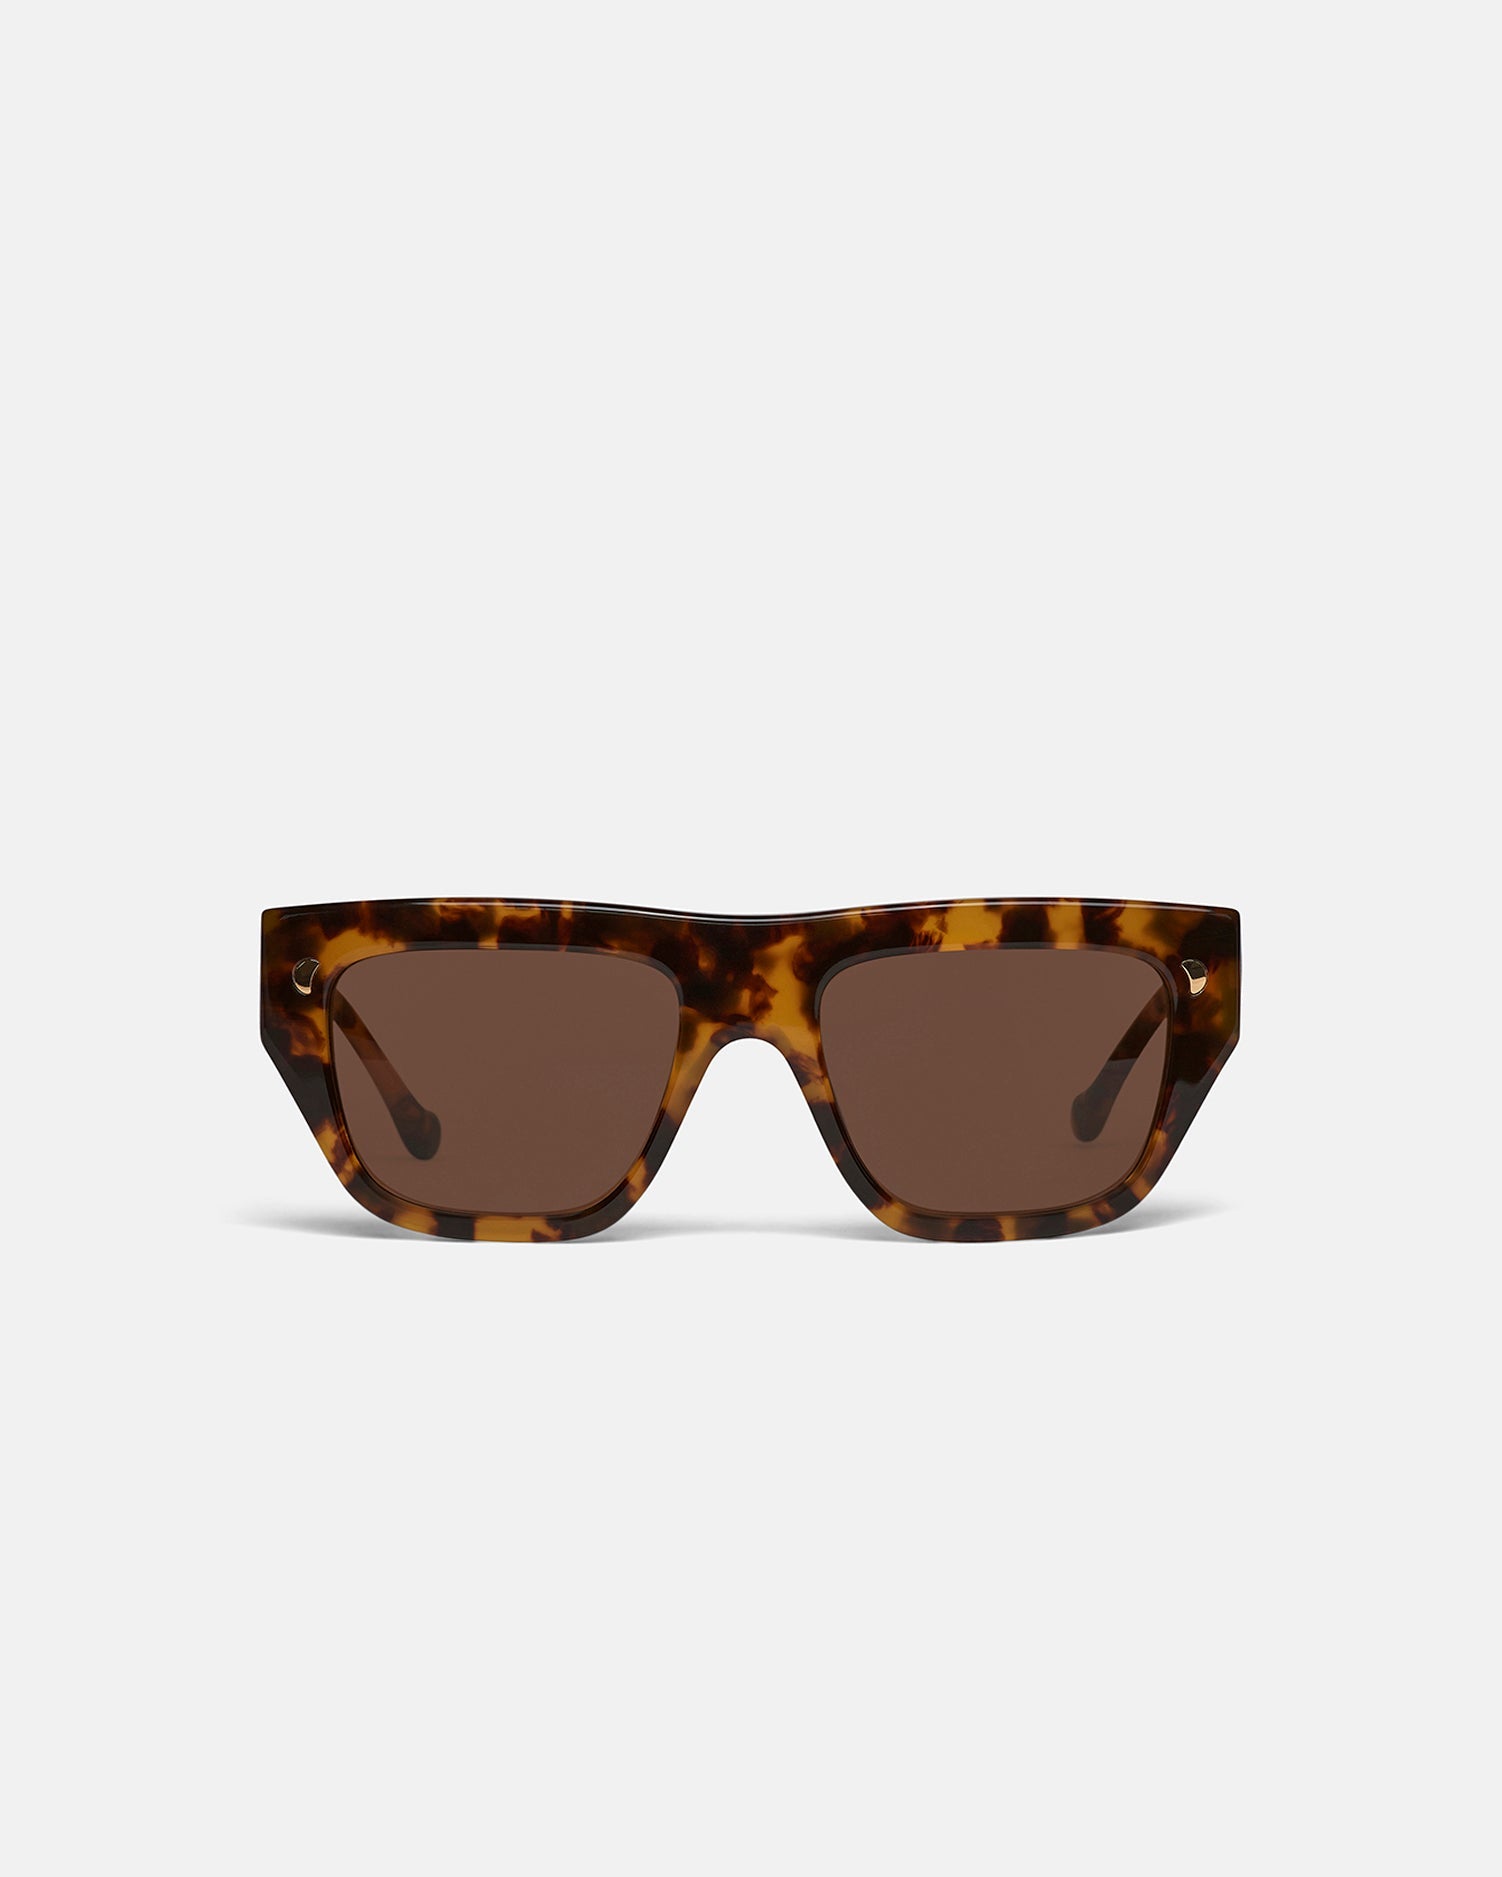 D-frame sunglasses